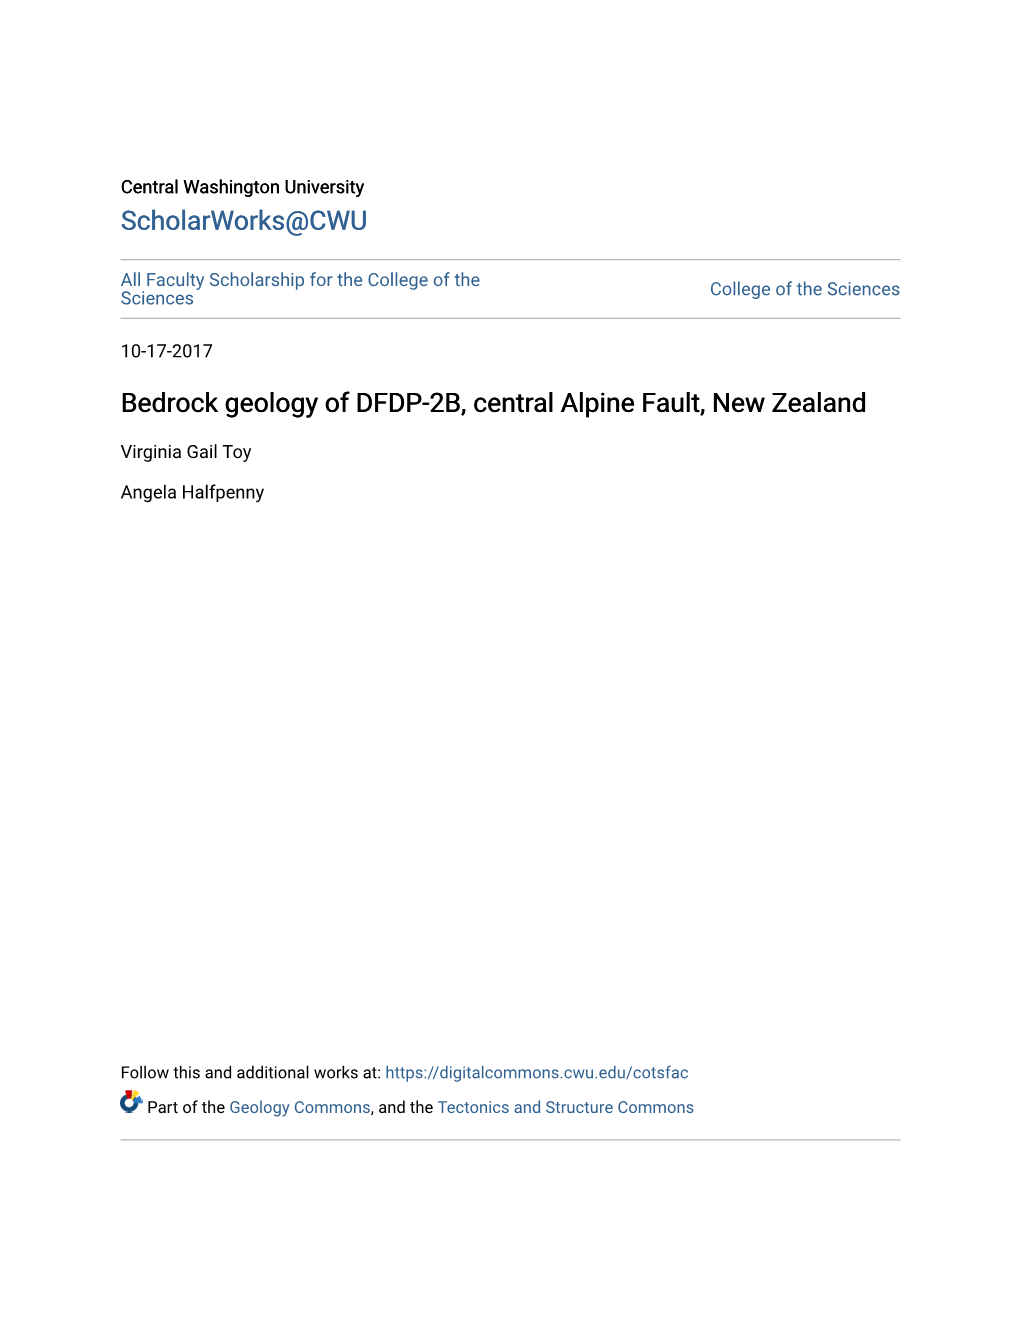 Bedrock Geology of DFDP-2B, Central Alpine Fault, New Zealand